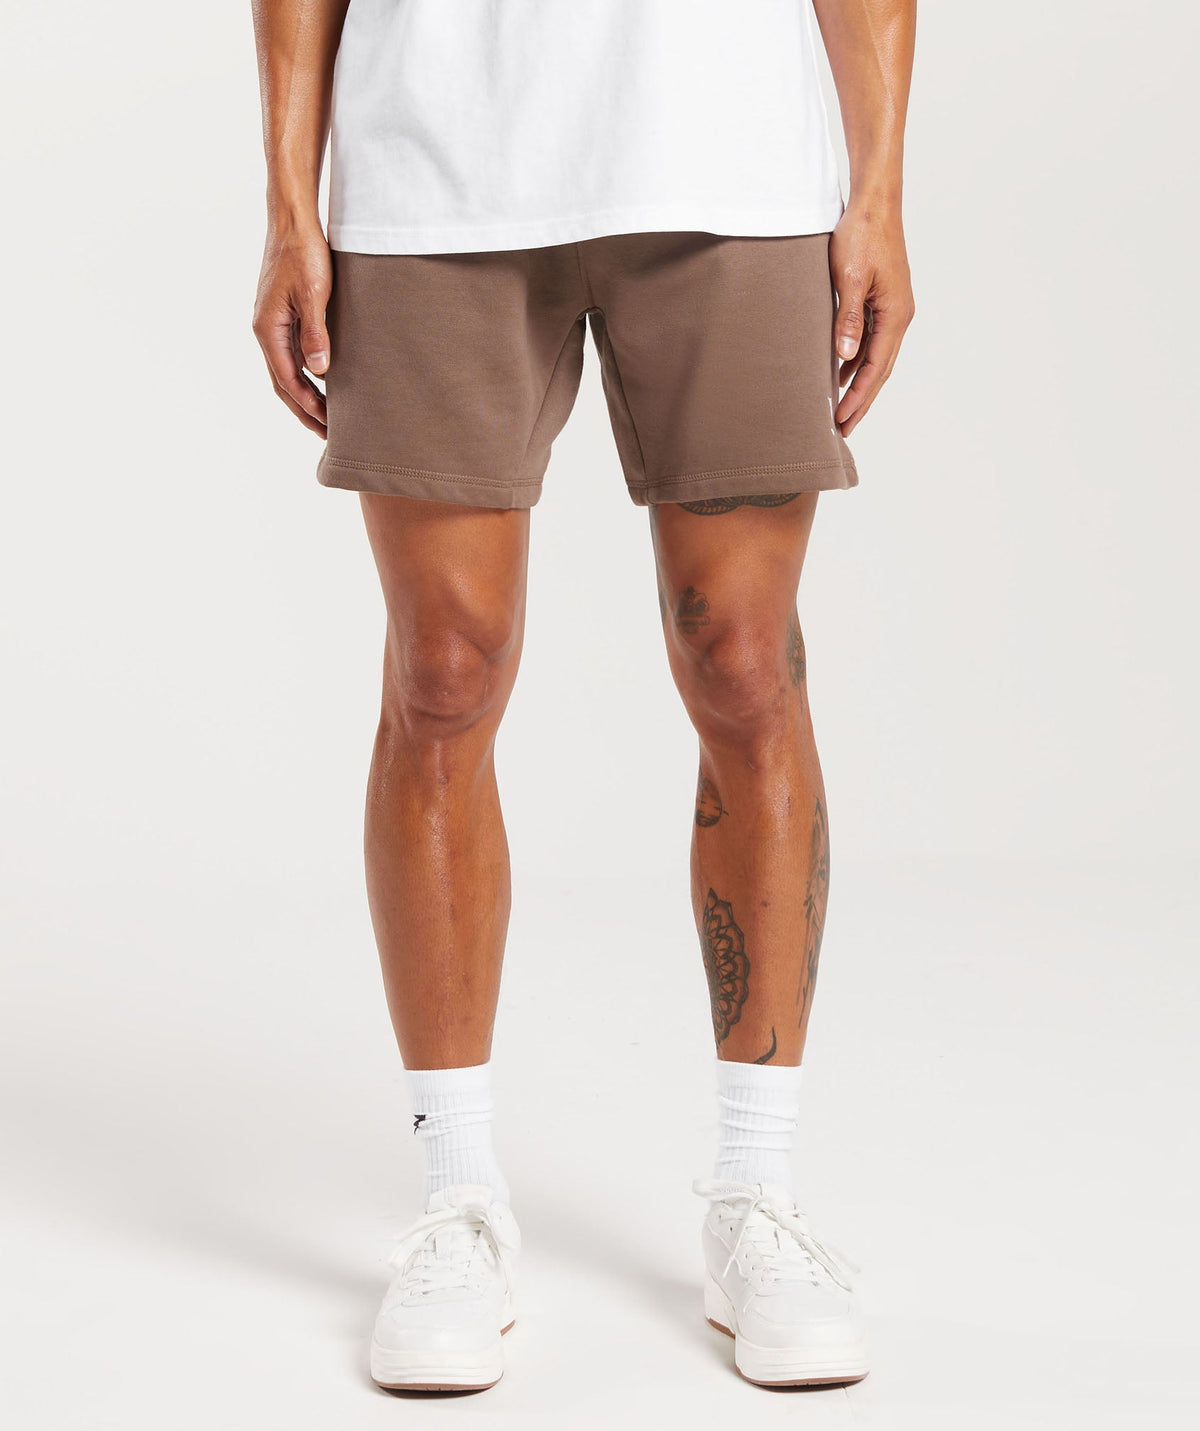 Gymshark Crest Shorts - Pebble Grey | Gymshark